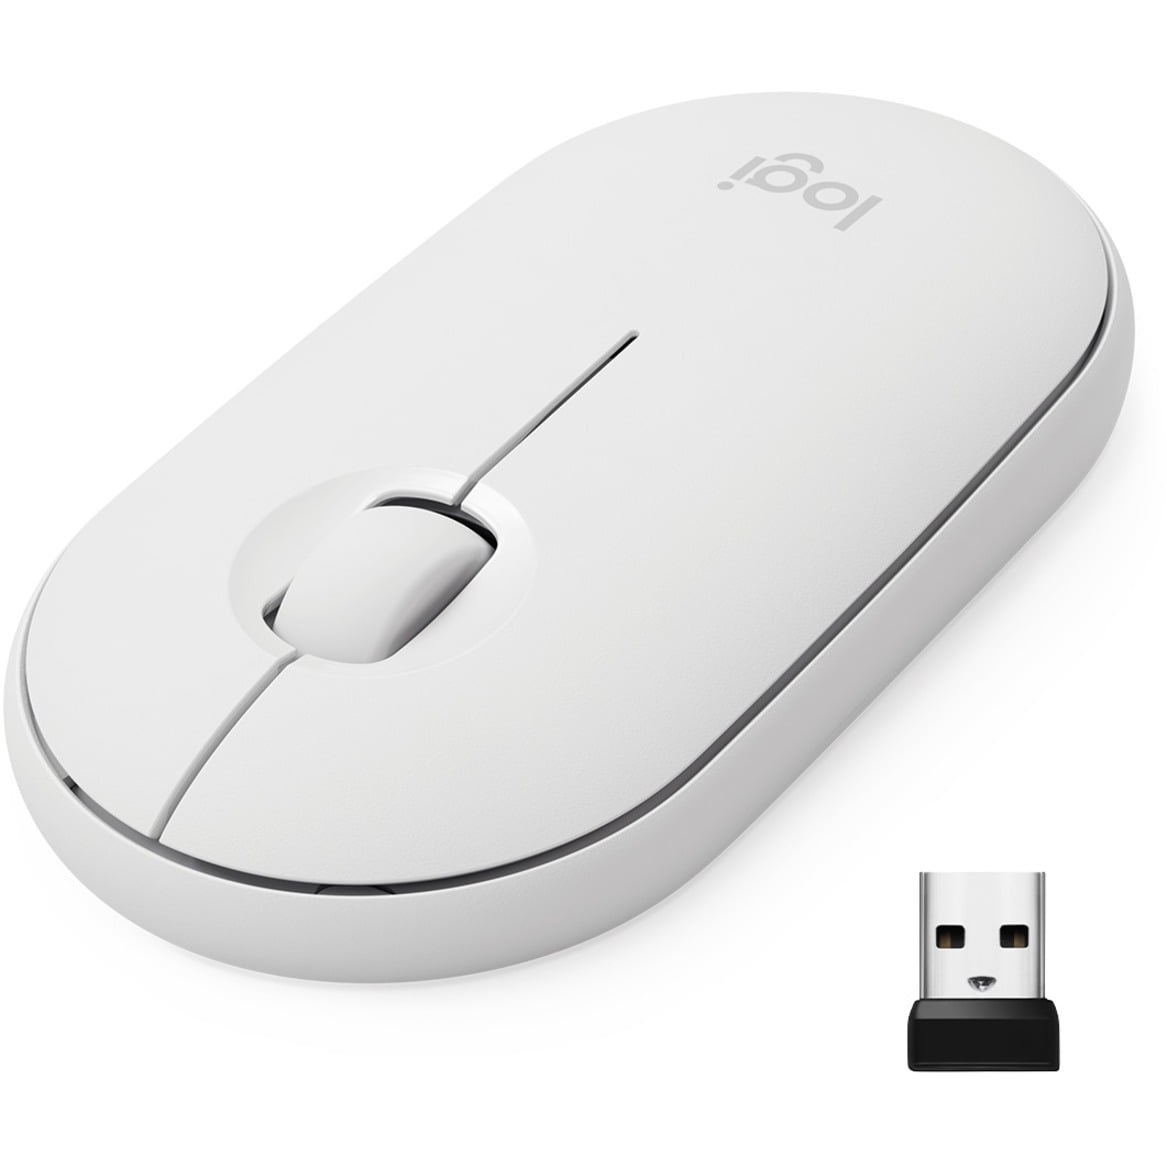 Logitech Pebble Wireless Mouse M350 - Walmart.com